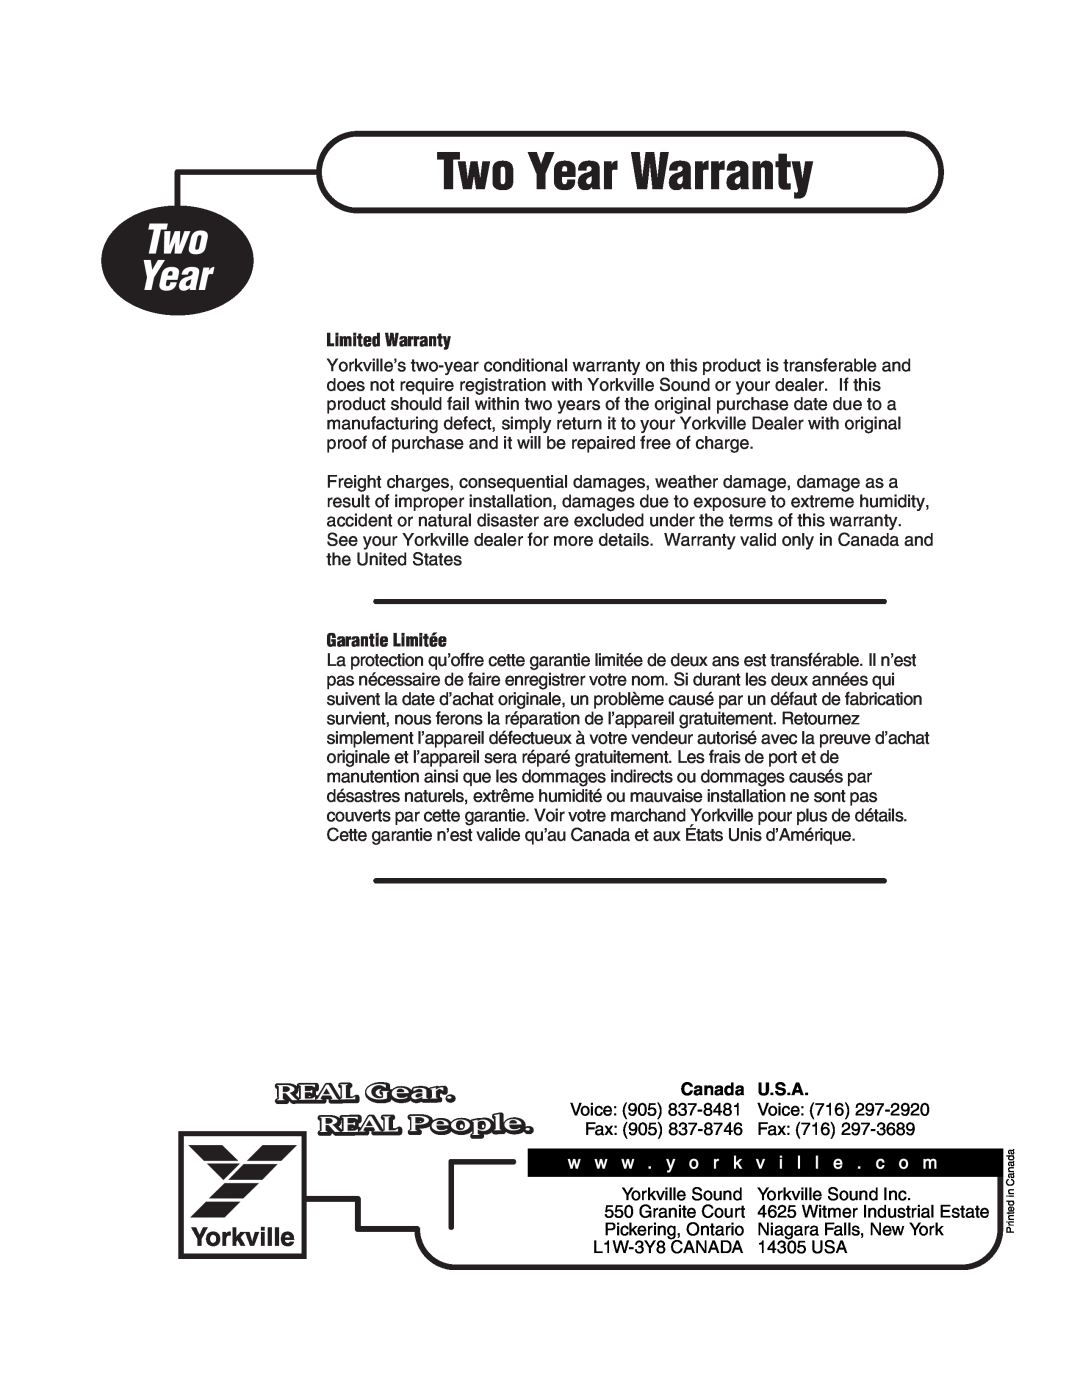 Yorkville Sound YSS1 Two Year Warranty, REAL Gear, REAL People, Limited Warranty, Garantie Limitée, Canada, U.S.A 